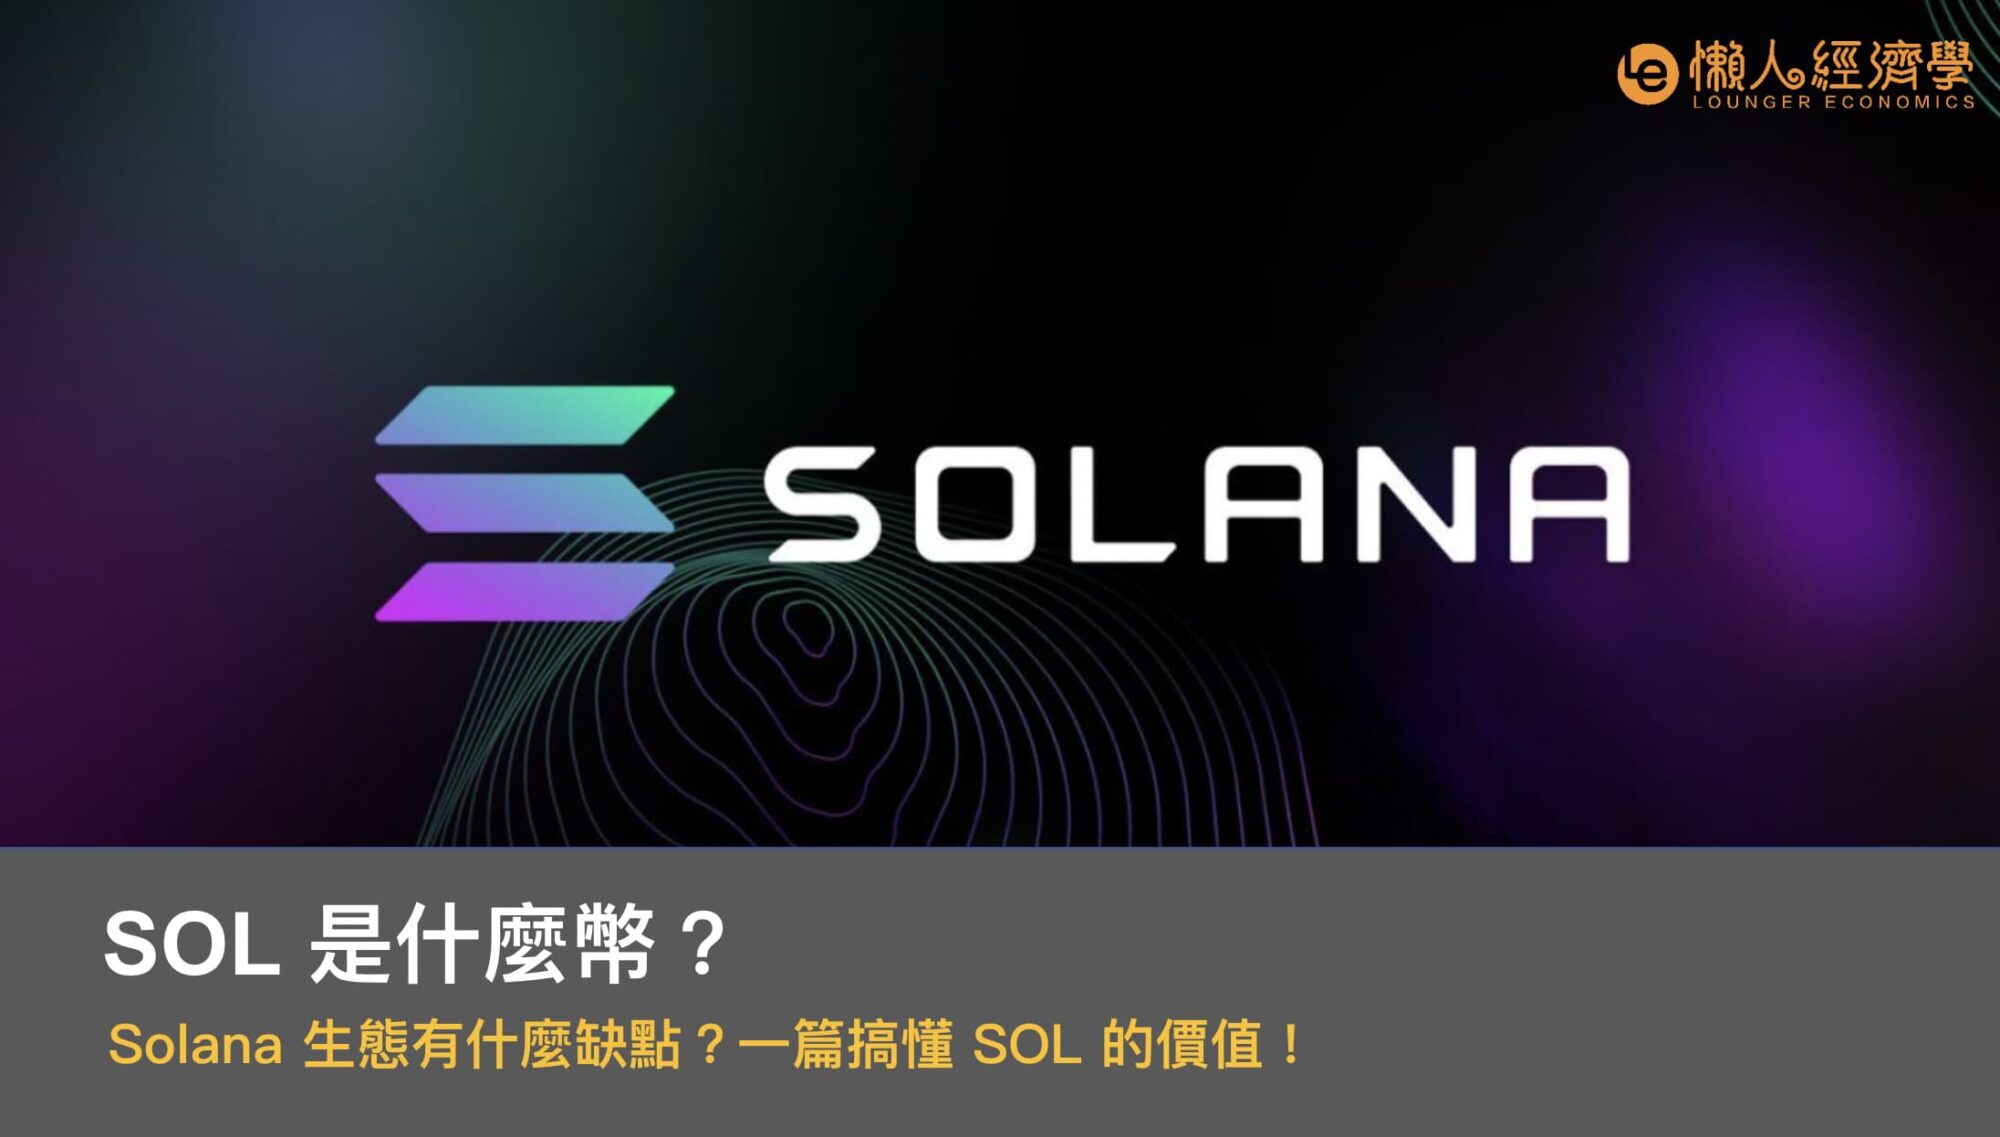 SOL 幣是什麼？與 Solana 的關係？SOL 幣用途、價格及購買教學